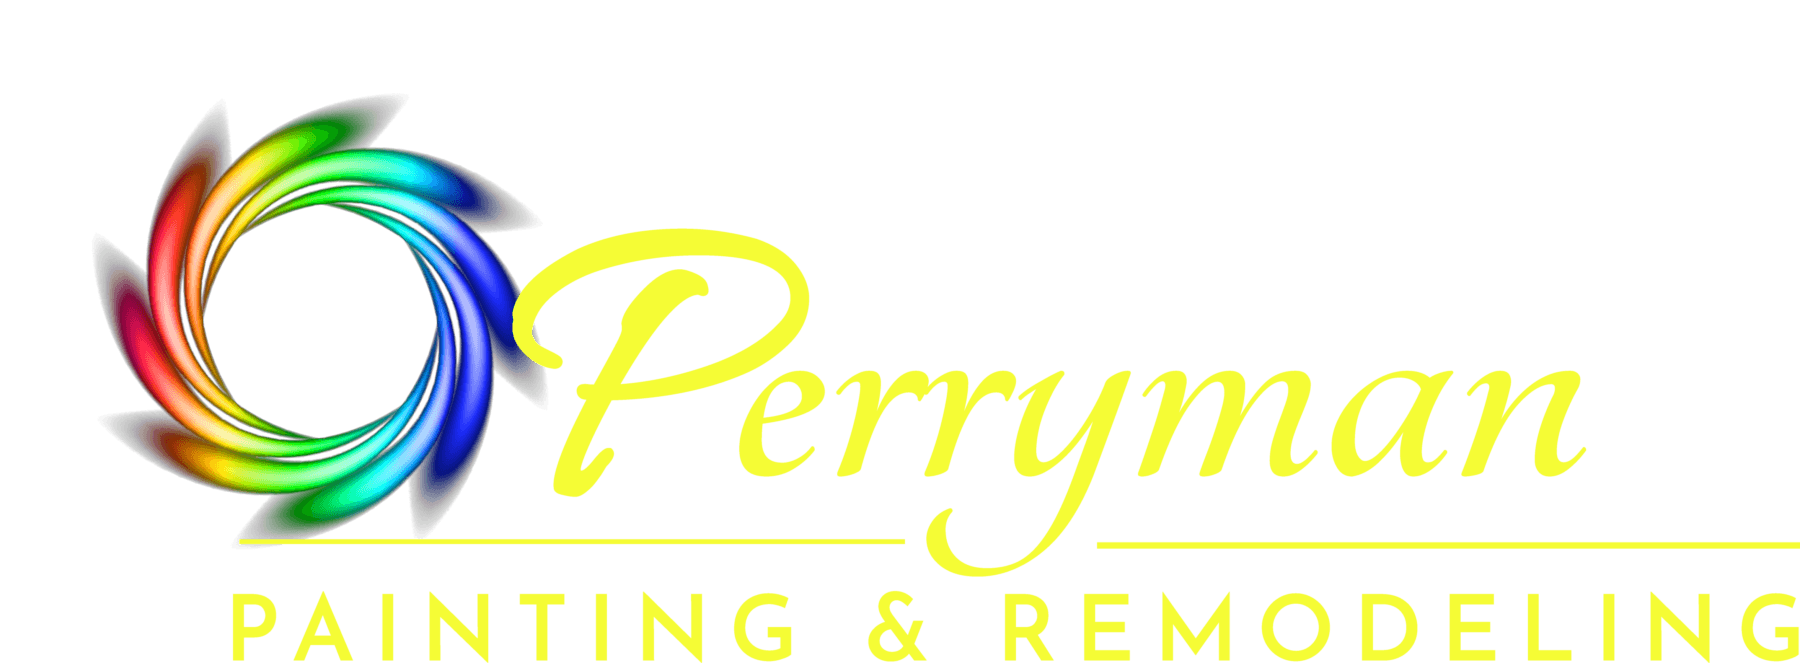 Perryman PaintingLogo